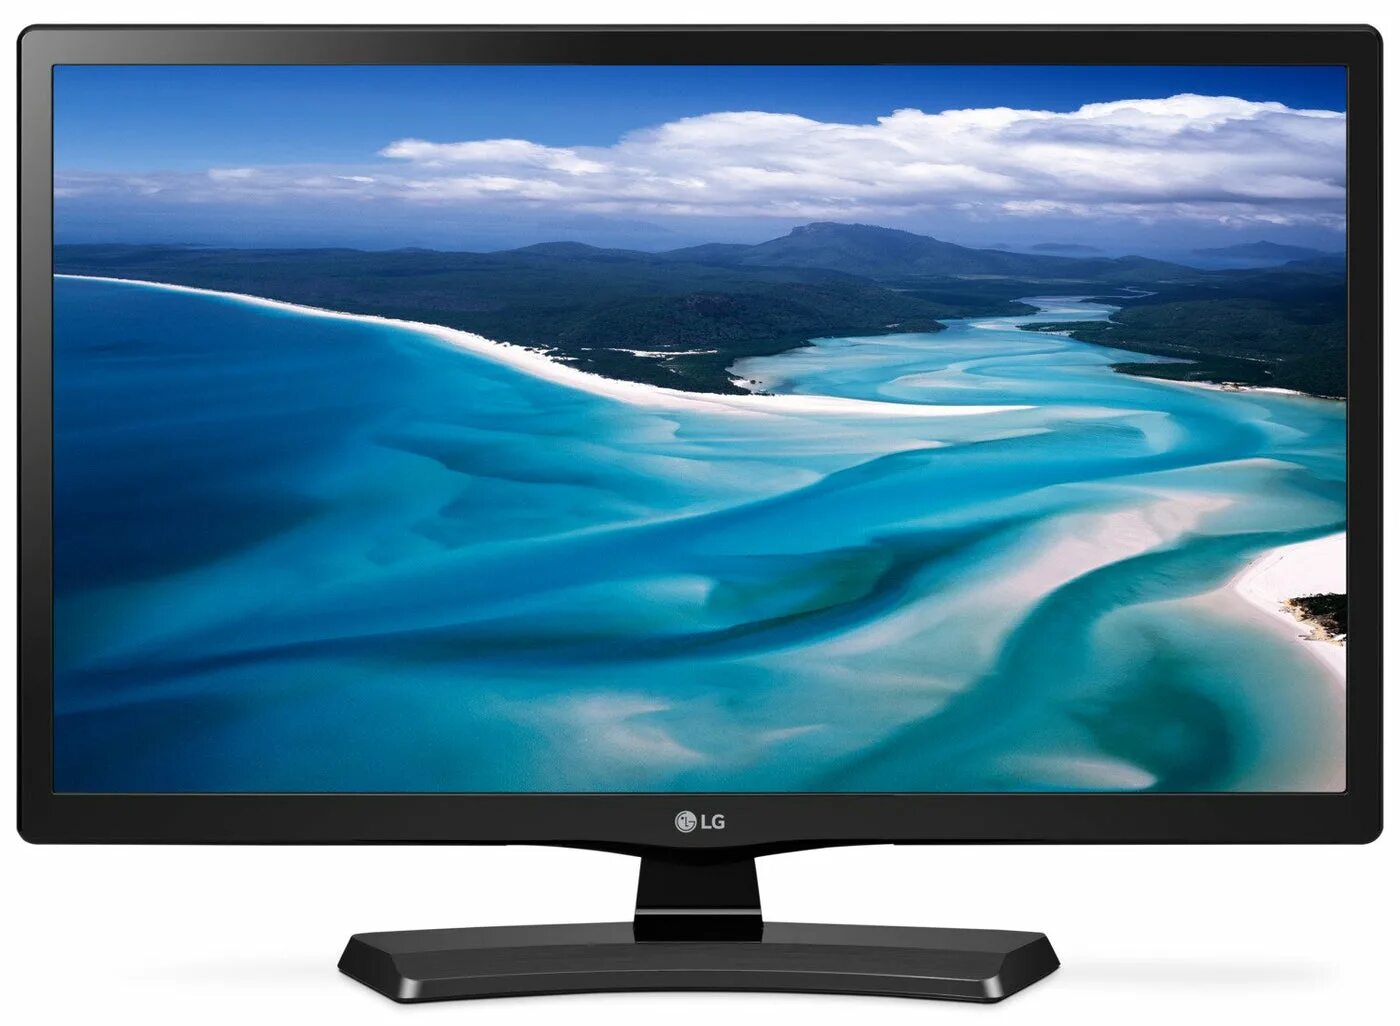 LG 24 Smart TV. Телевизор LG 24lb540u. Samsung 24 p2470hd. Led телевизор 24 LG 24lh451ueac. Samsung 24 дюйма купить